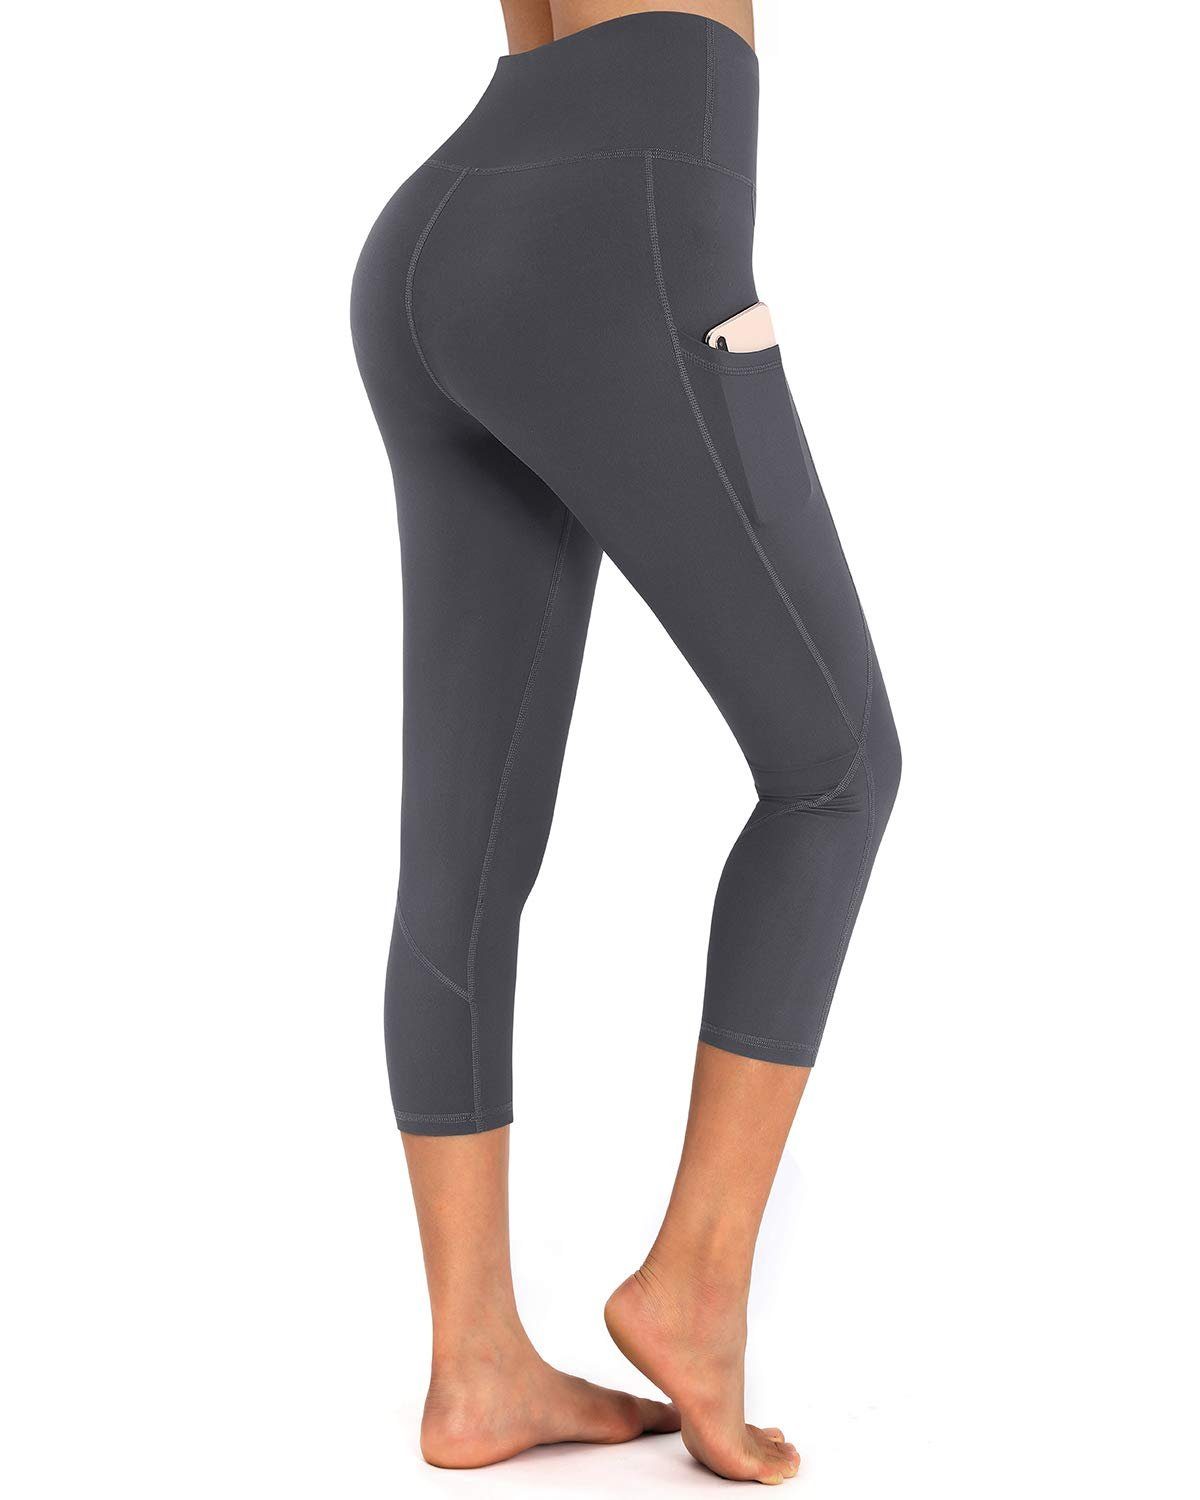 Grau Fitness-Laufleggings Taille Taschen, hoher mit G4Free Damen-Yogahose Yogahose